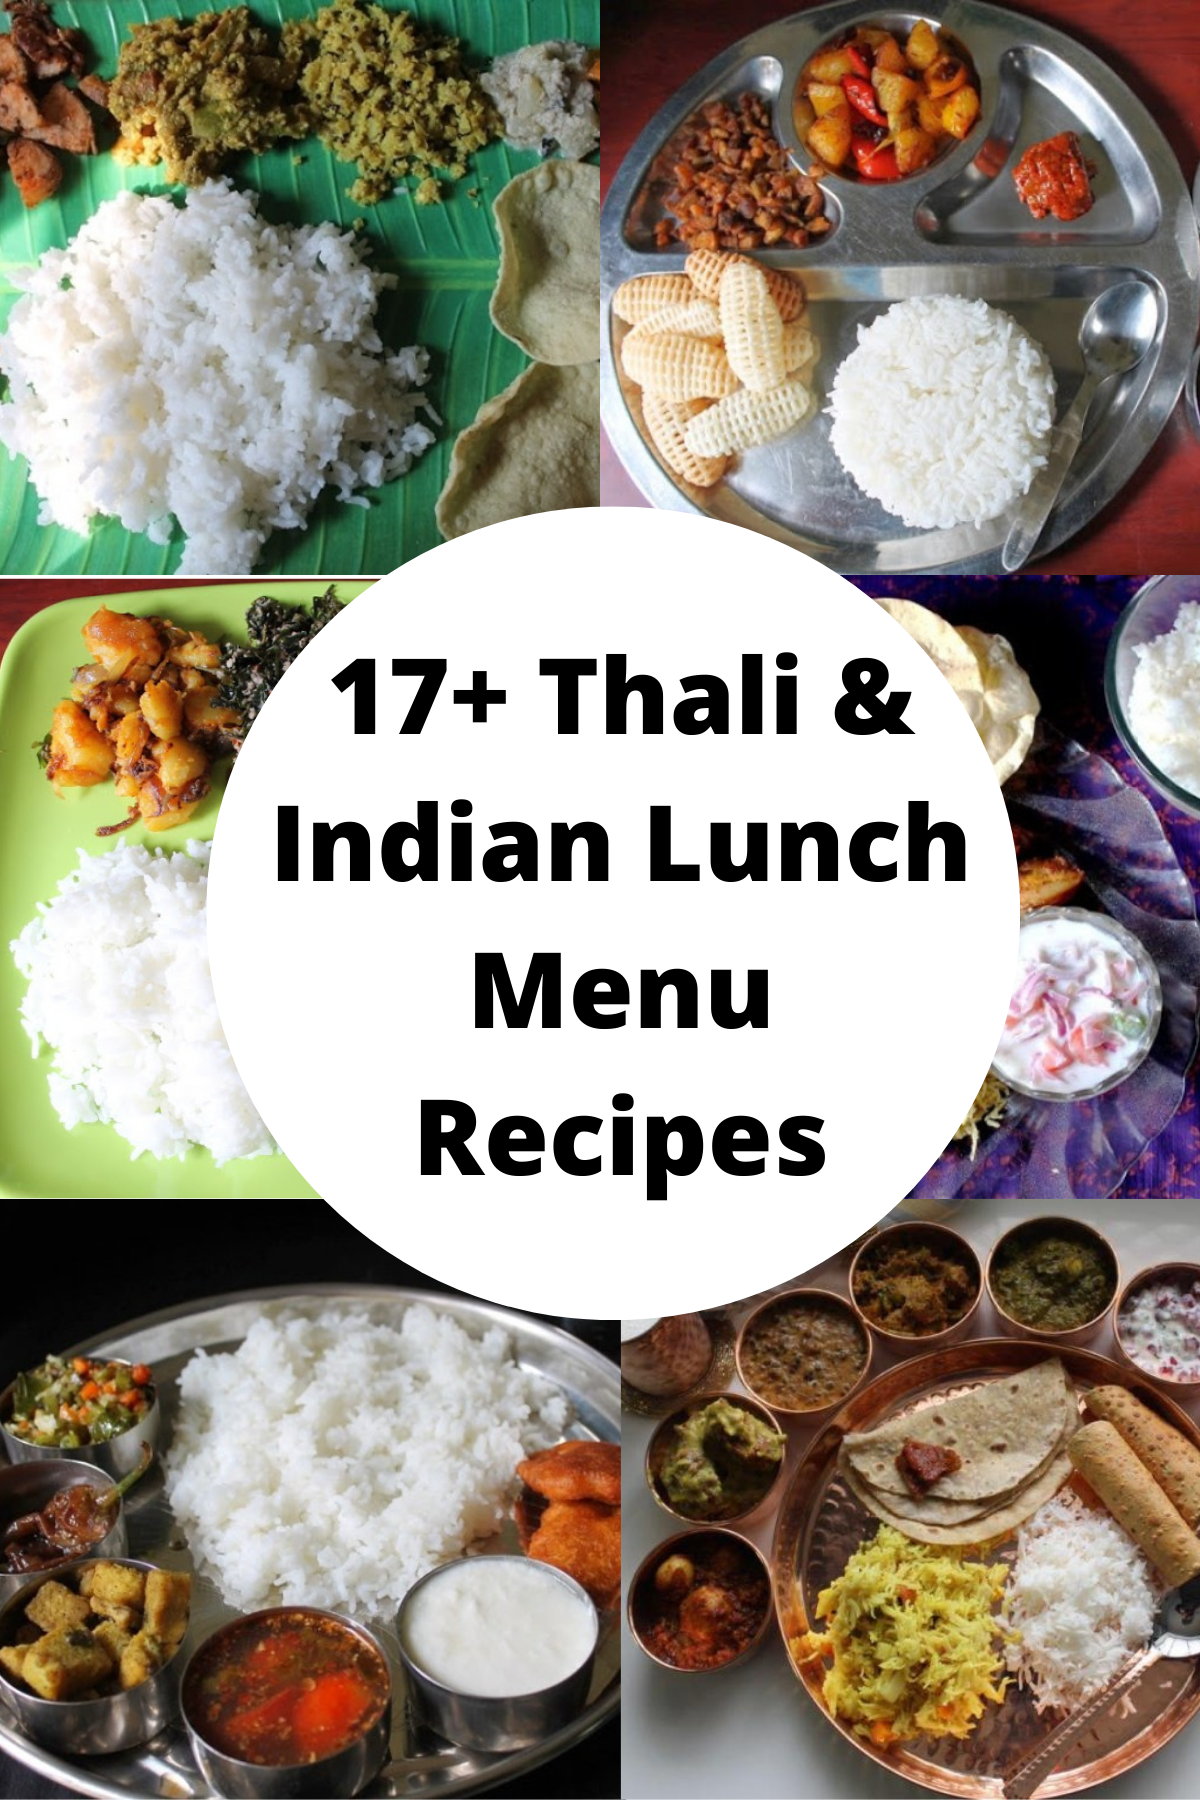 https://www.yummytummyaarthi.com/wp-content/uploads/2022/02/17-Thali-Indian-Lunch-Menu-Recipes.png